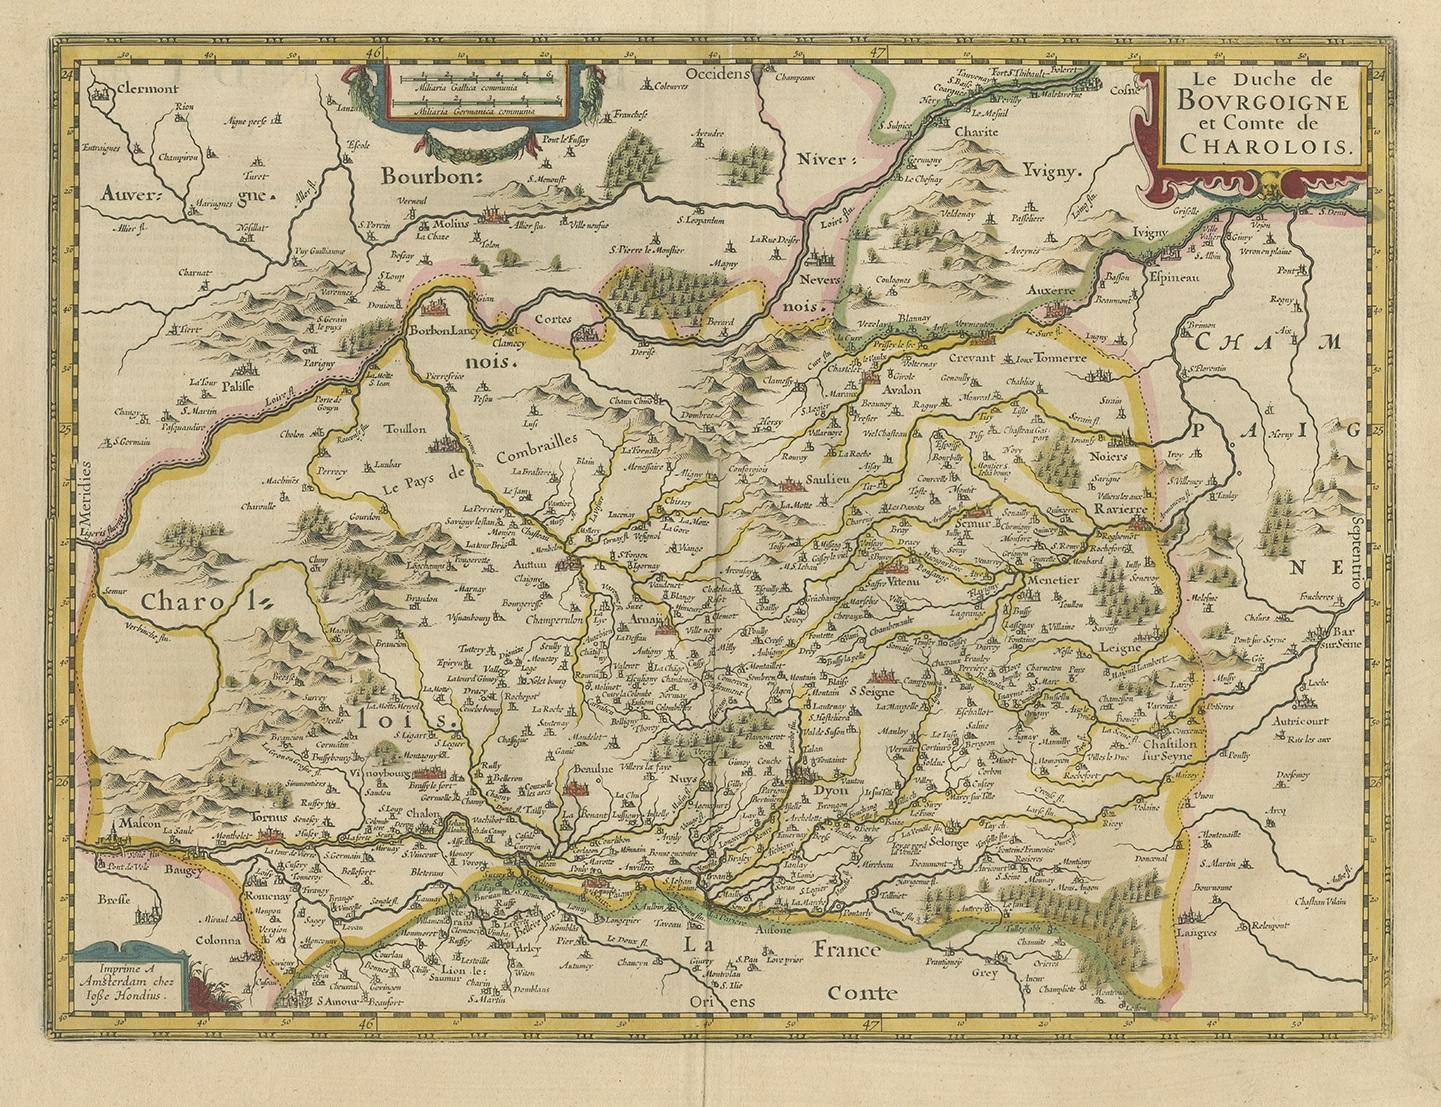 Antique map titled 'Le Duche de Bourgoigne et Comte de Charolois'. It shows the region of Burgundy and Charolais including Geneva, Rochefort, Verdun, Chalon, Dole and more. Published in Amsterdam by Hondius.